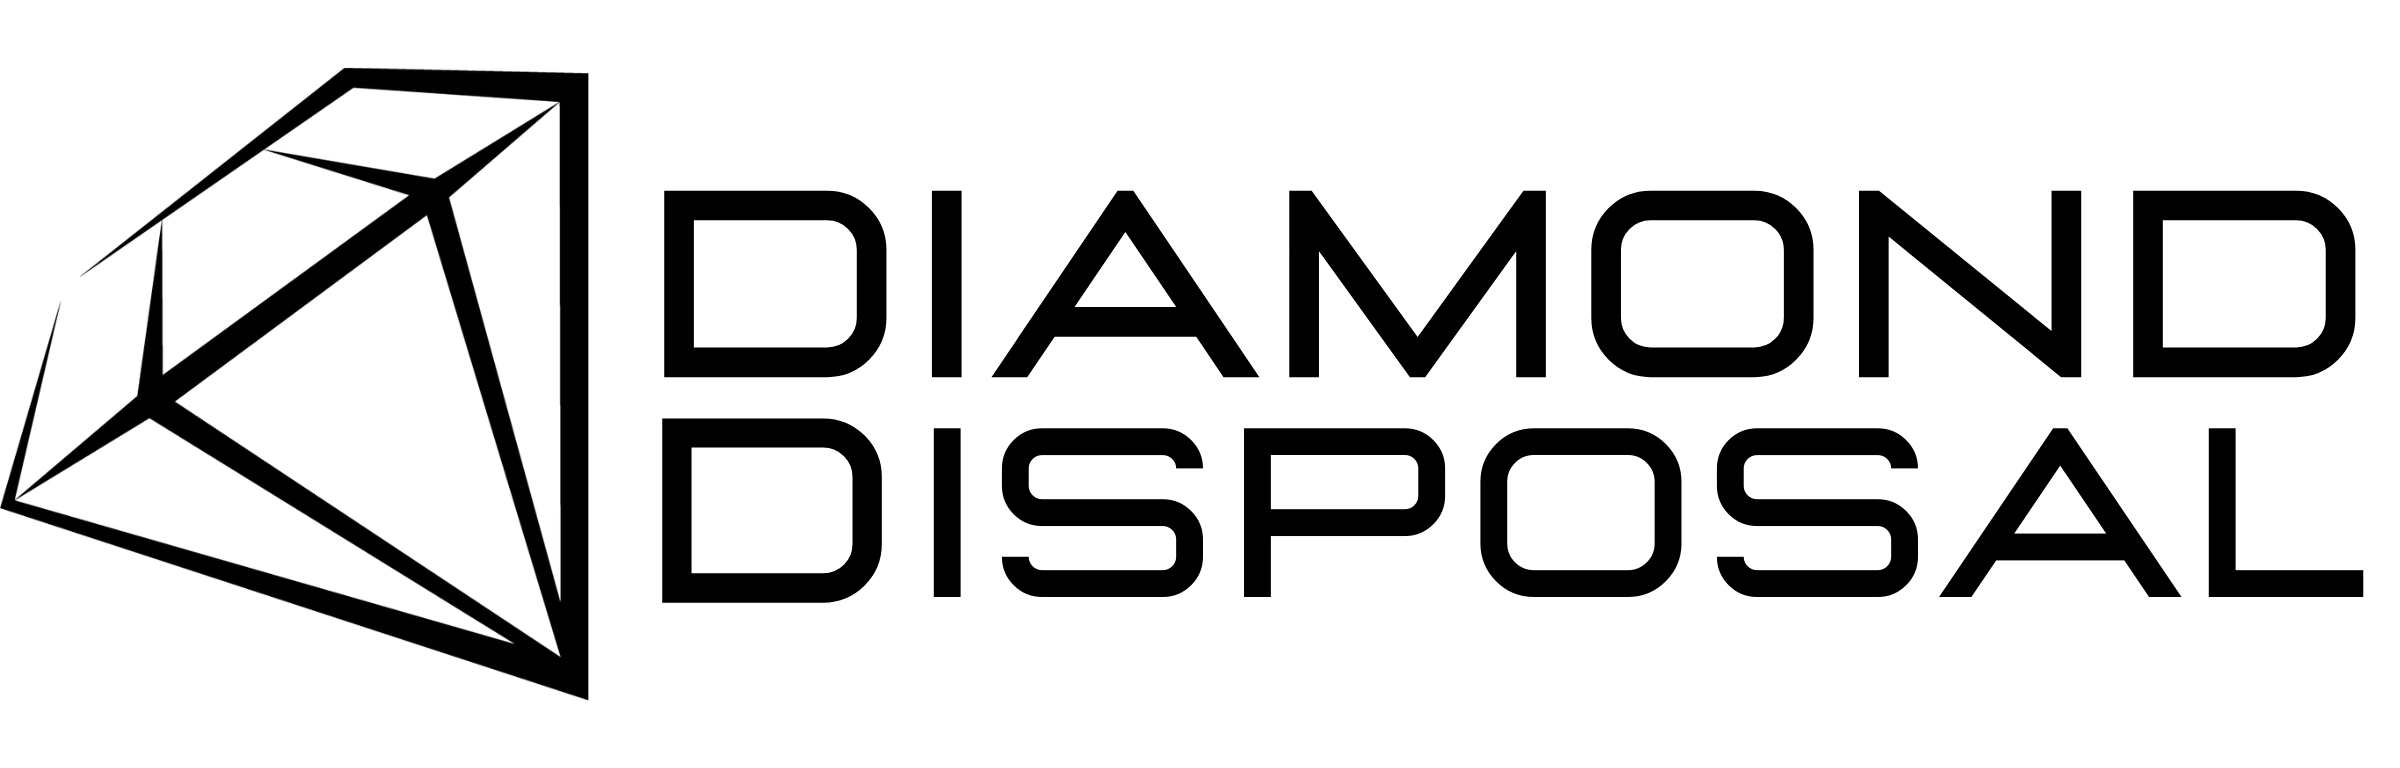 diamond disposal